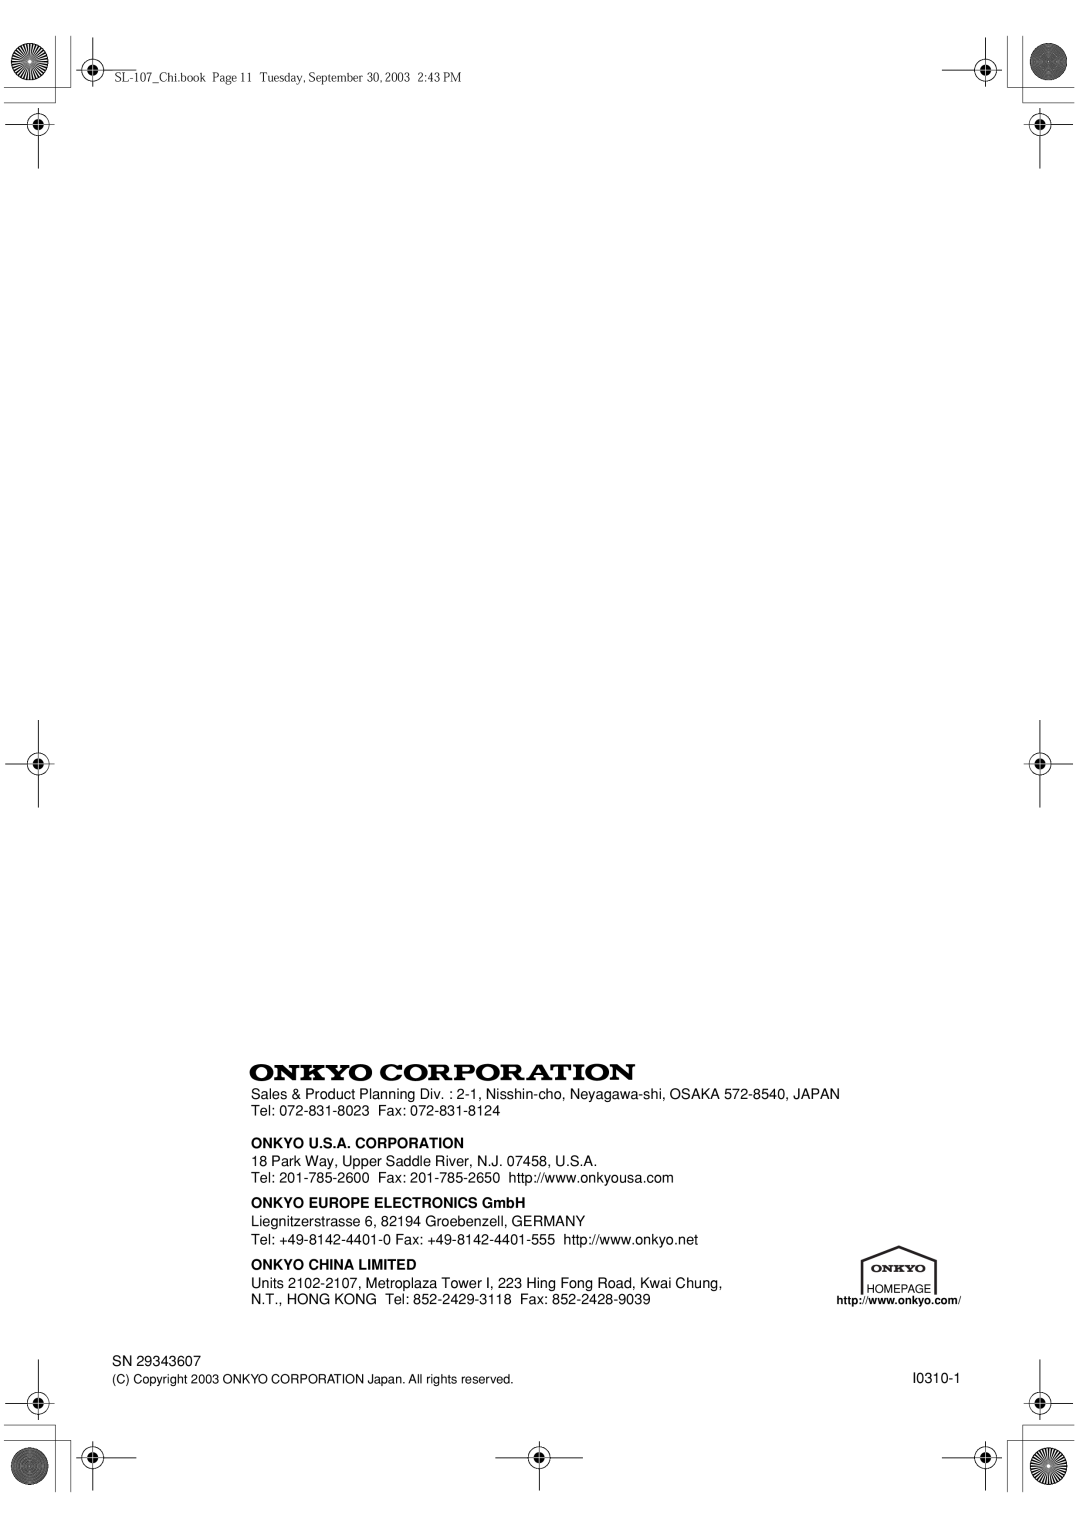 Onkyo SL-107 instruction manual Cs-11, Onkyo U.S.A. Corporation, ONKYO EUROPE ELECTRONICS GmbH, Onkyo China Limited 